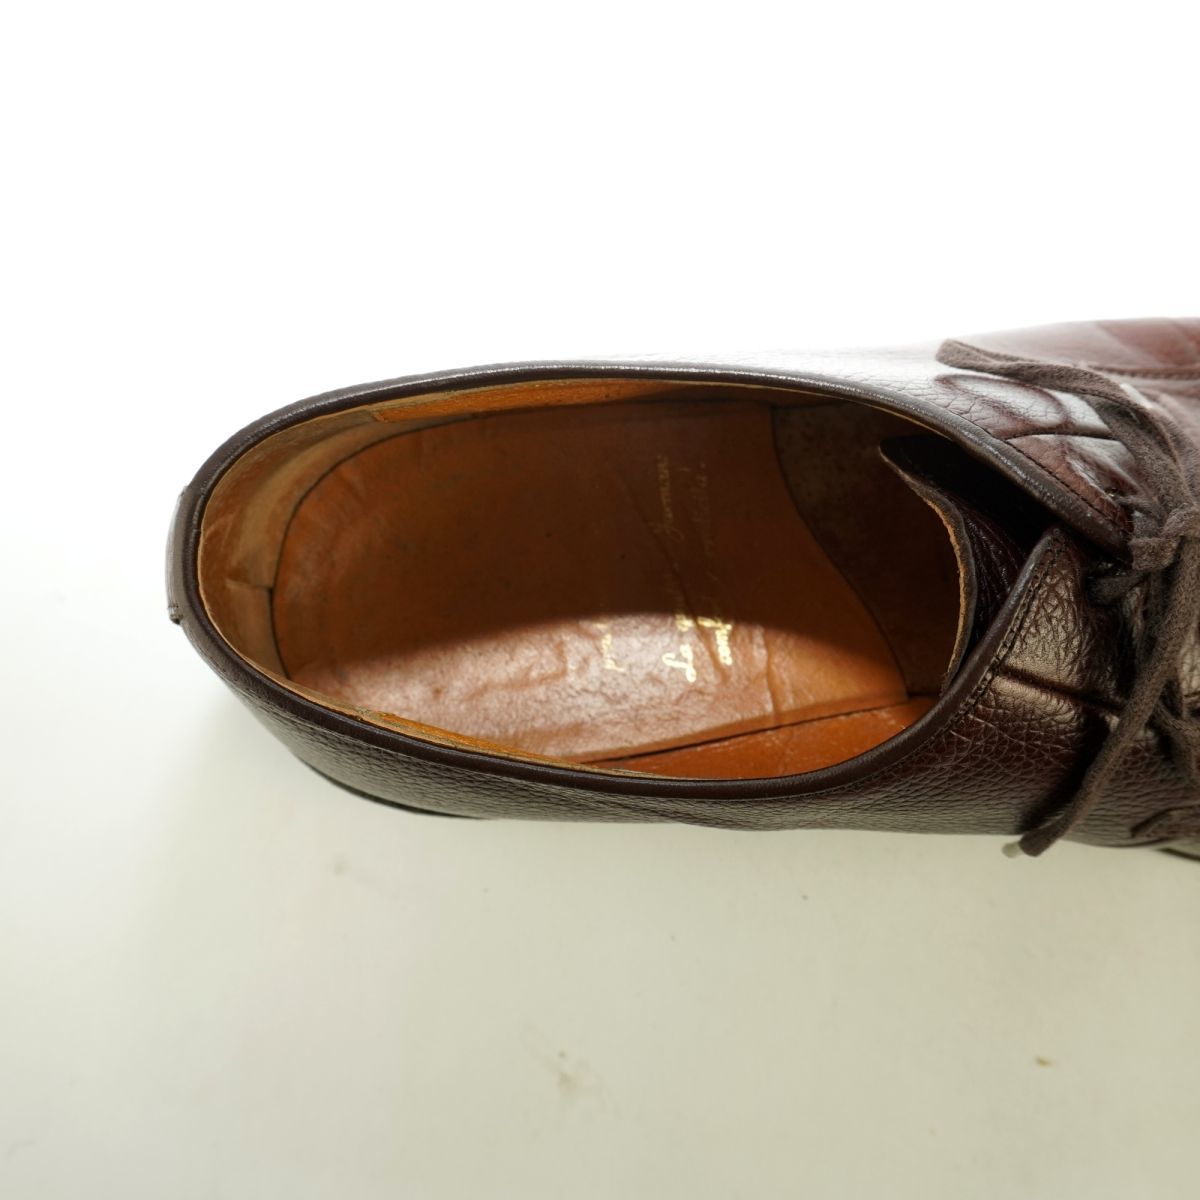 Jarman shoes for men ジャーマン 25 1/2 25.5 革靴 ビジネスシューズ 外羽根式 メンズ レザー 本革 茶色 ブラウン/EC60_画像6